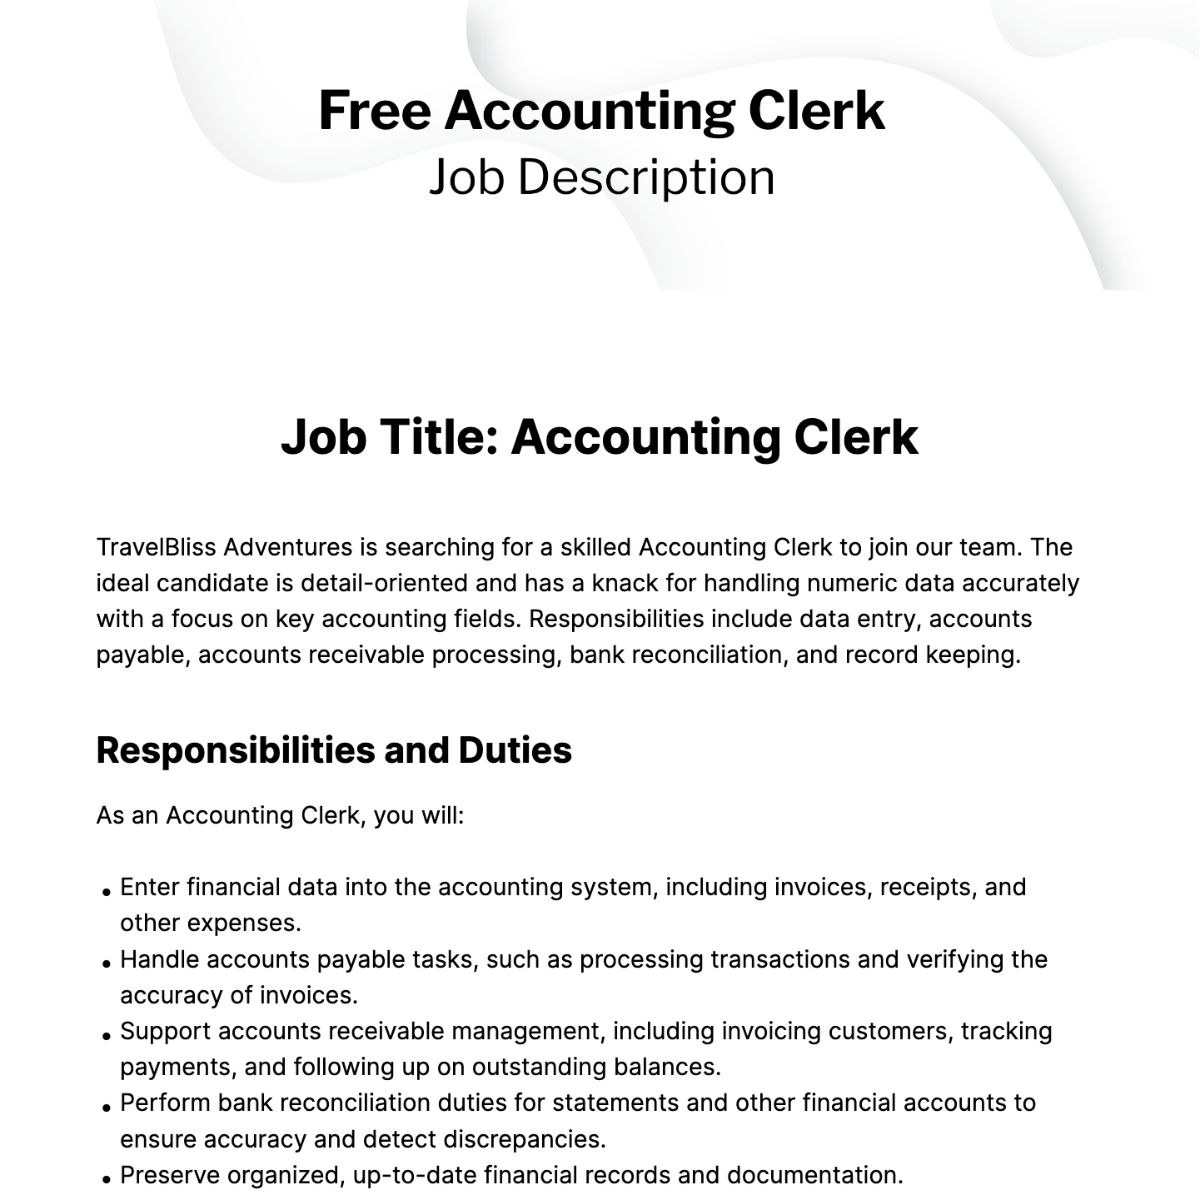 Free Accounting Clerk Job Description Template